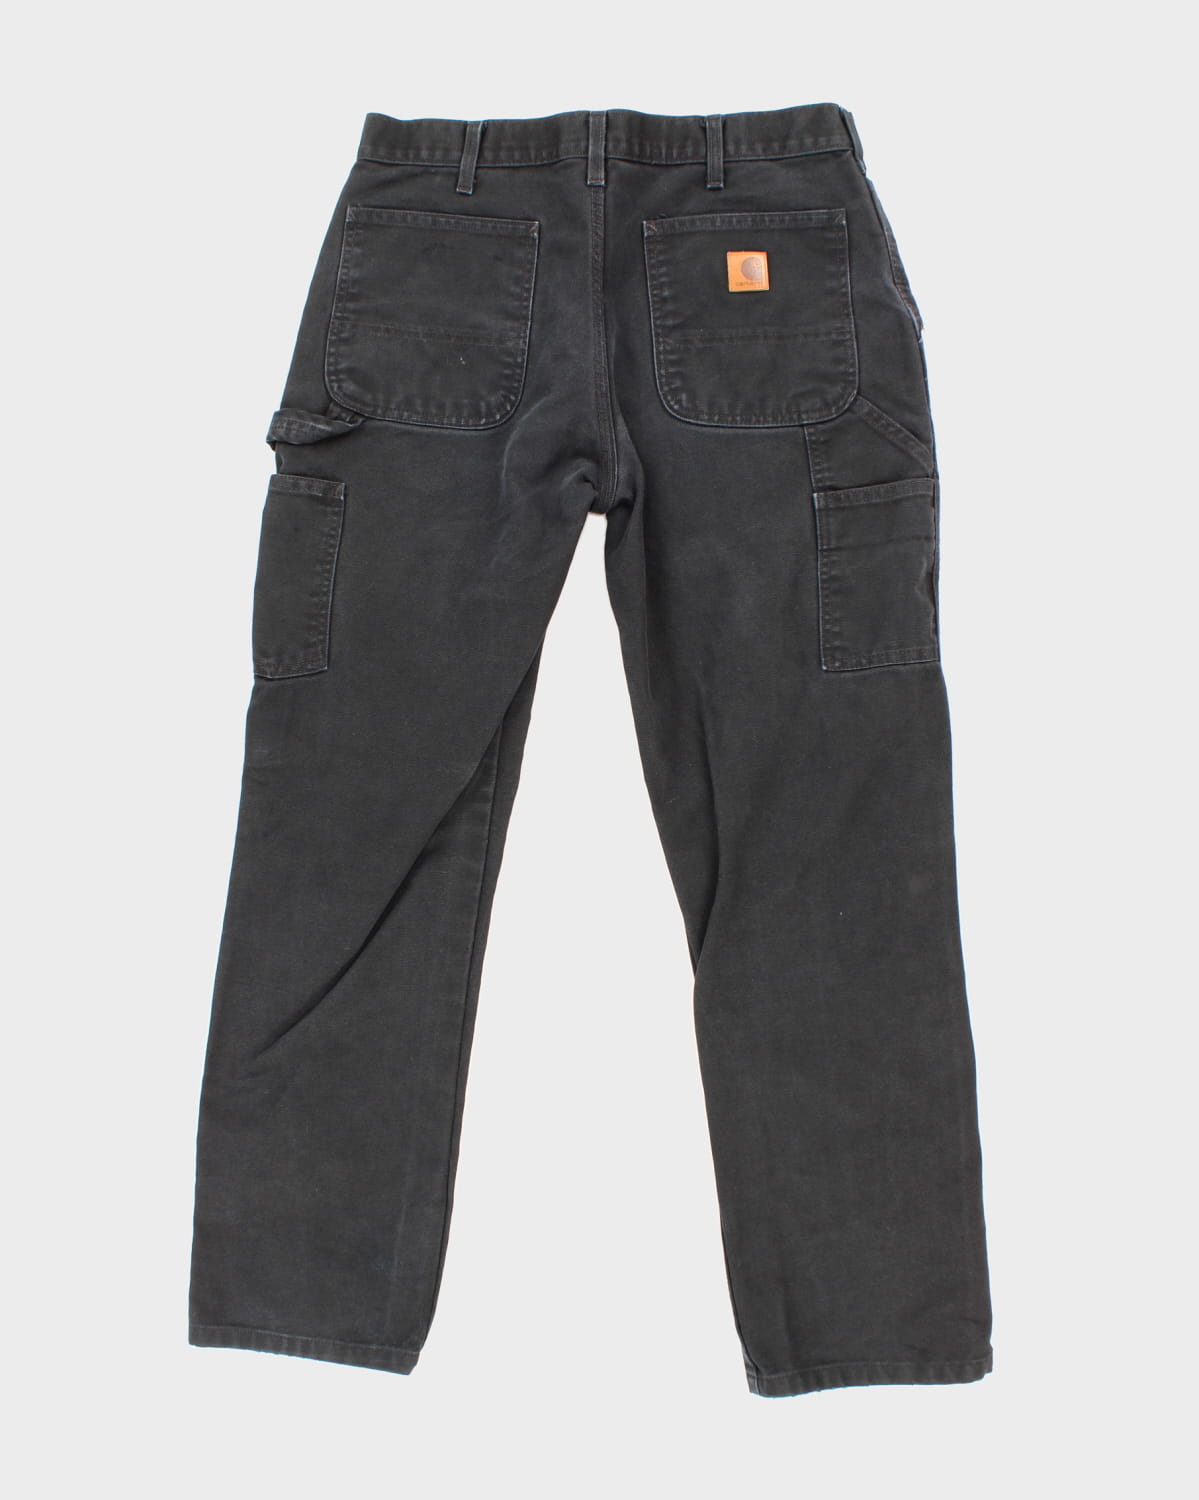 Carhartt Original Dungaree Fit Trousers - W34 L32